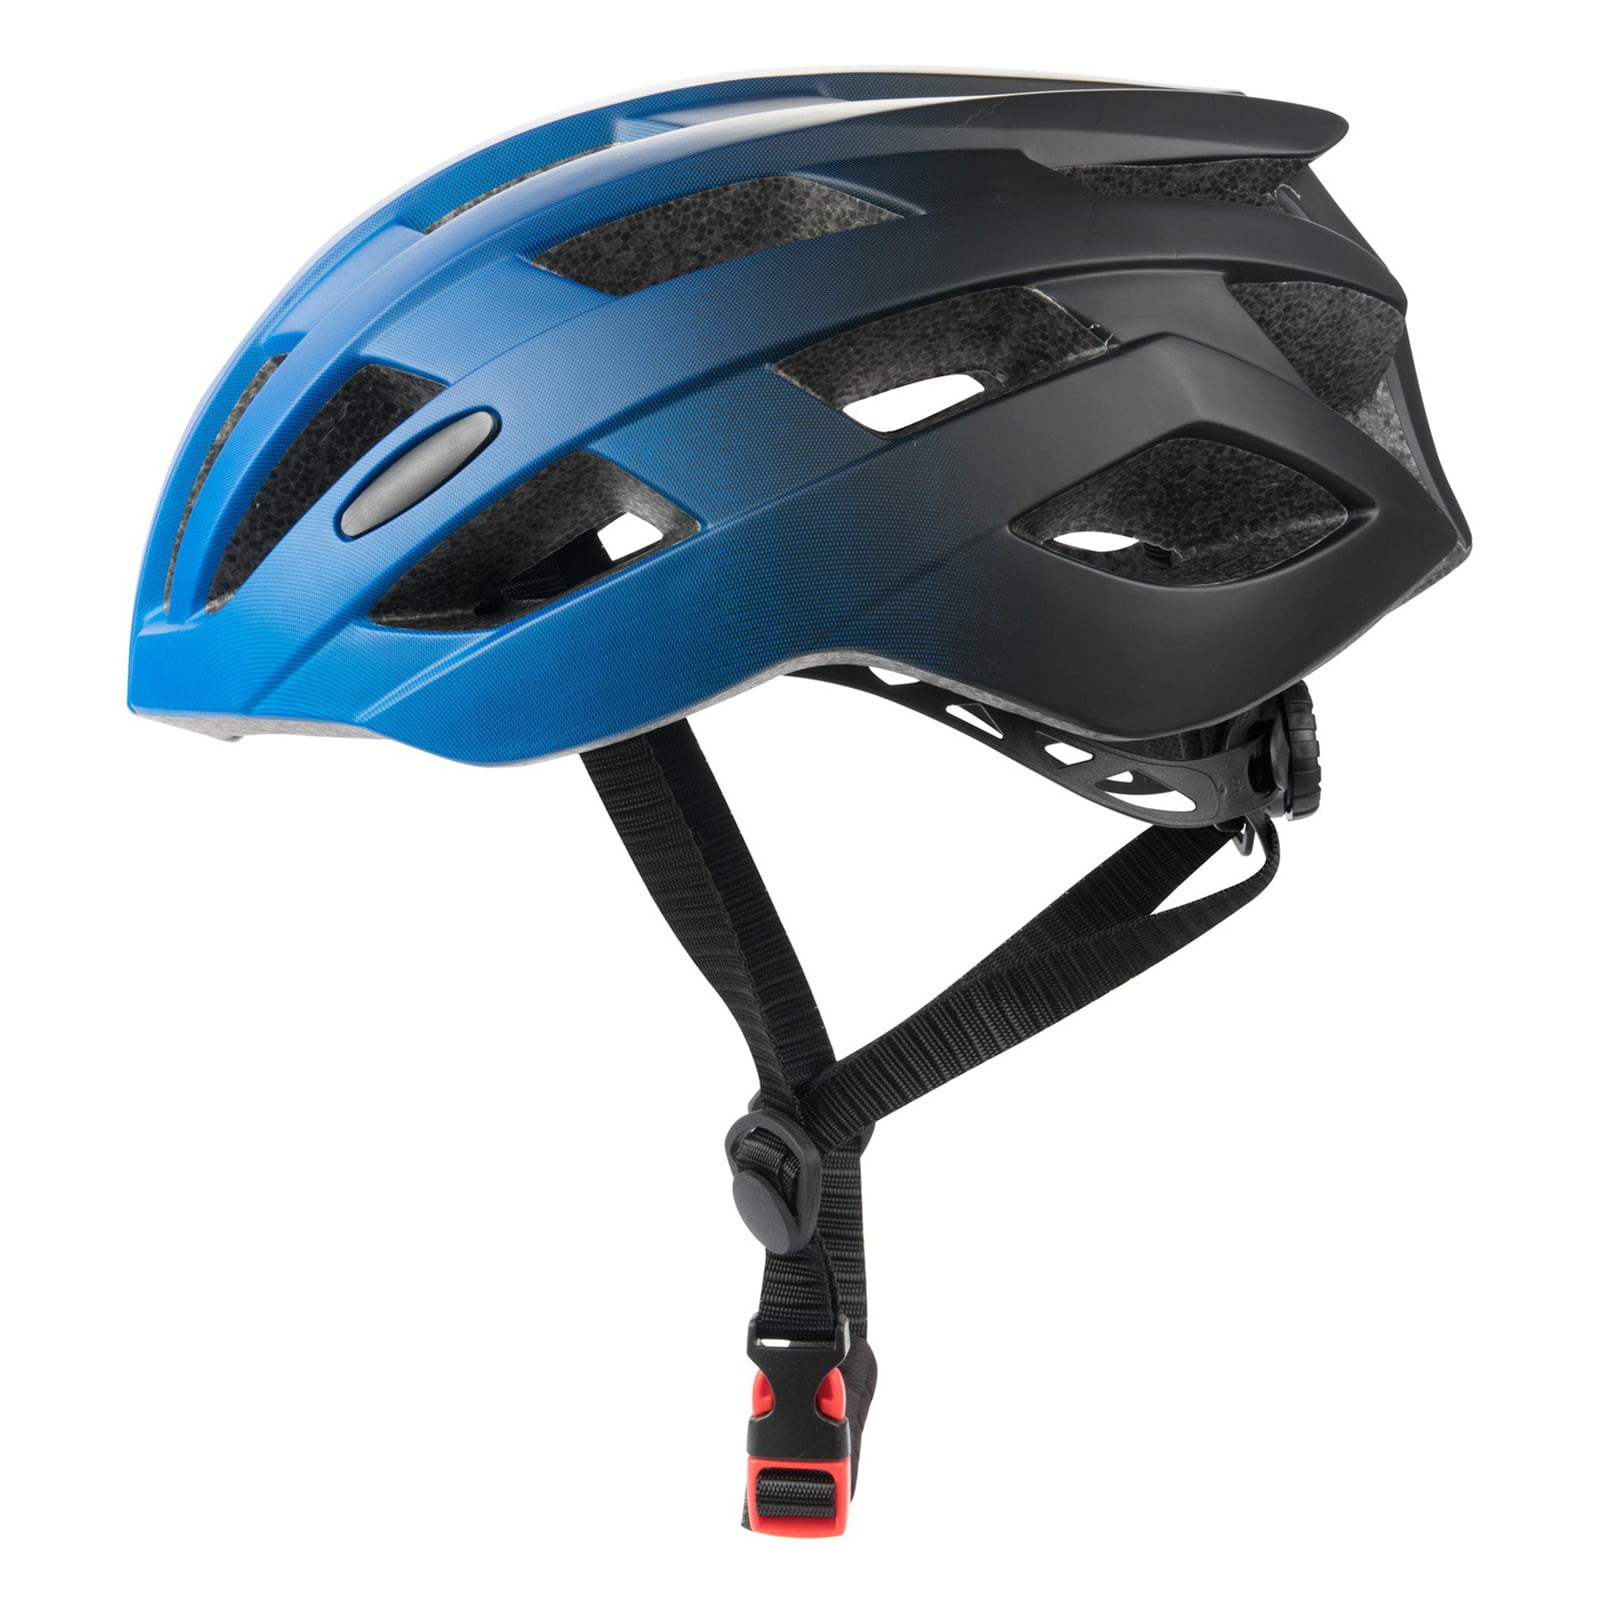 Bicycle Helmet Men Ladies Rode Bike Cycling Safety Helmet Sport Protective Q8X3 